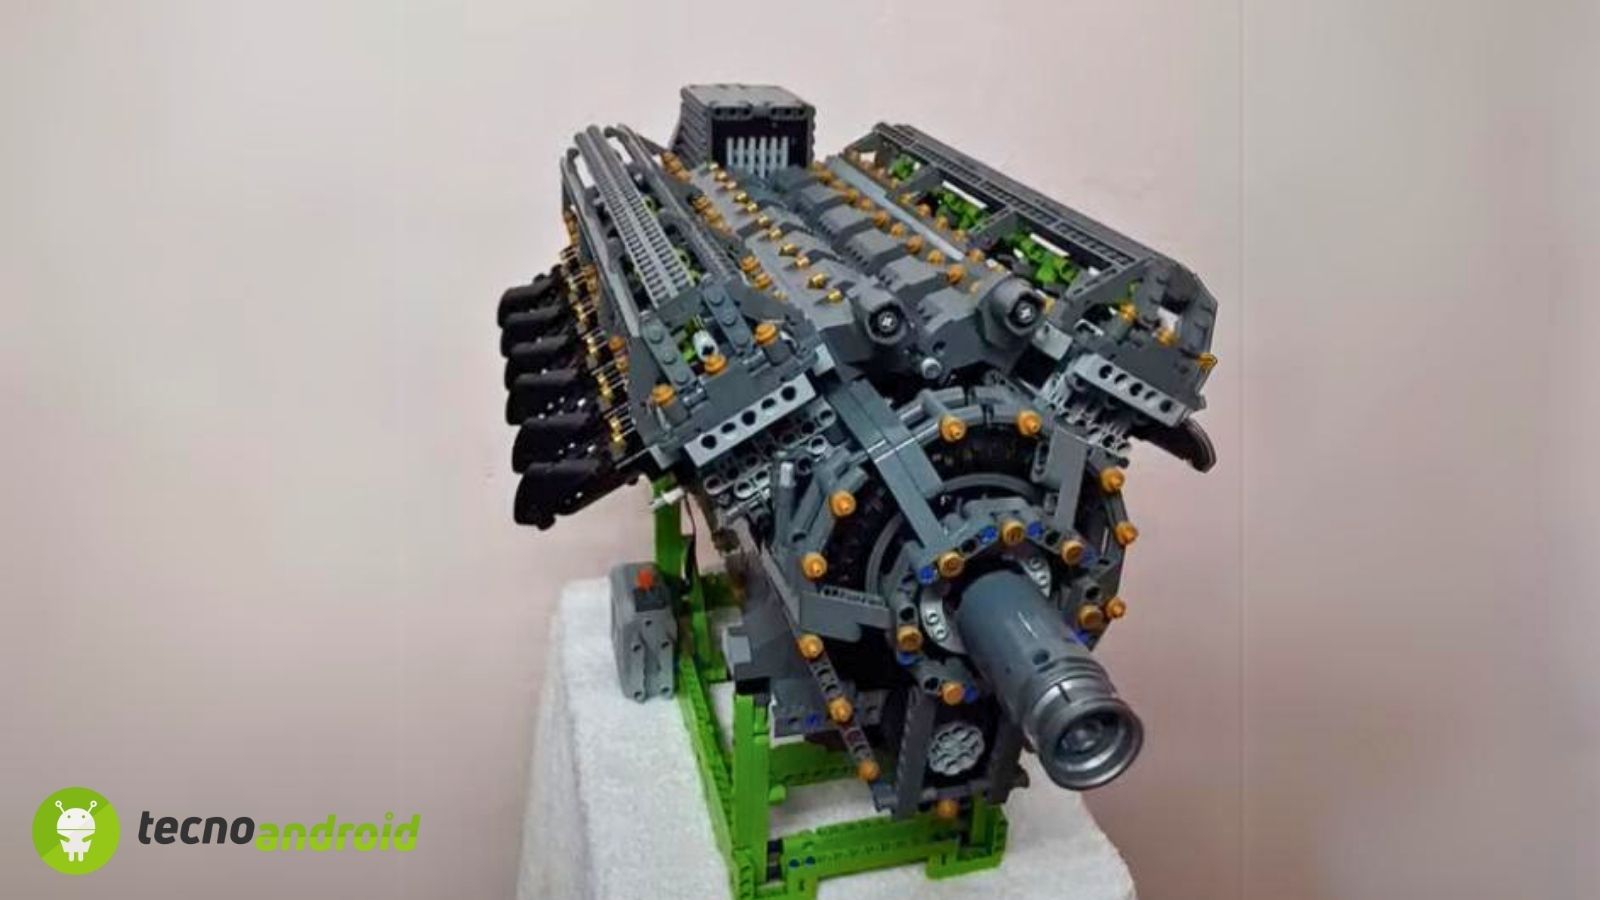 MOTORE ROLLS-ROYCE MERLIN V12 MATTONCINI LEGO